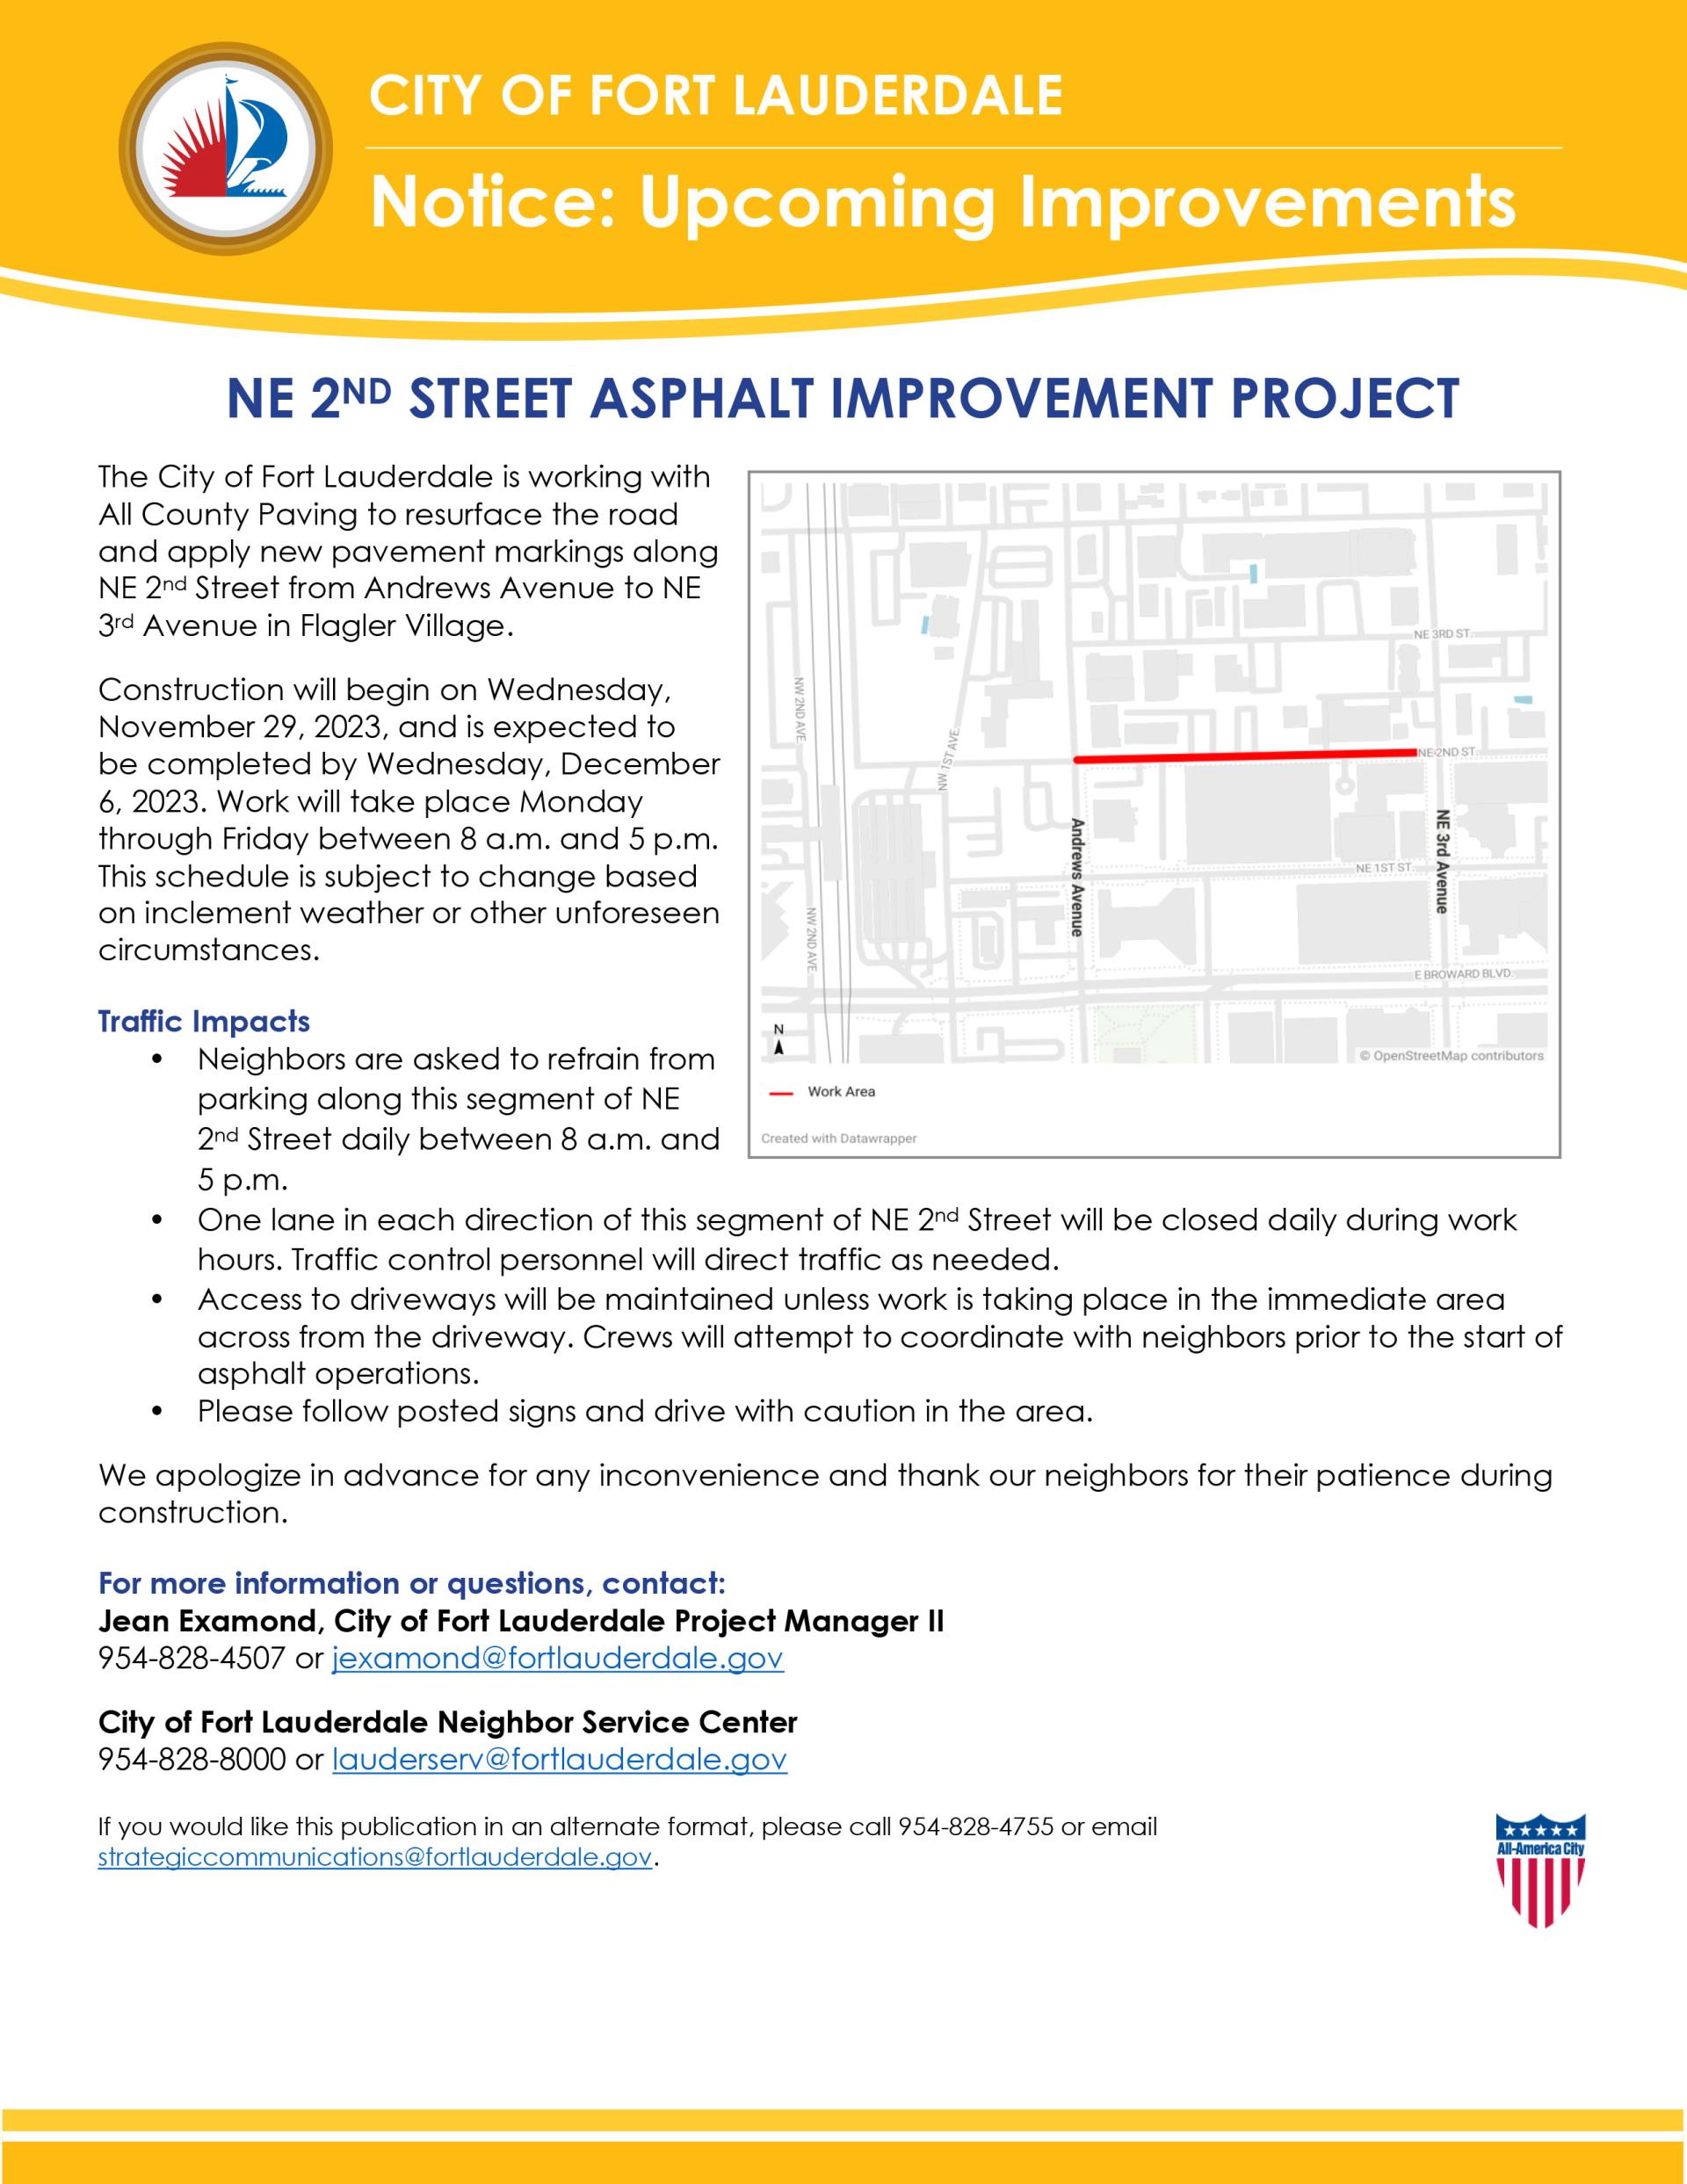 NE-2nd-Street-Asphalt-Improvement-Project